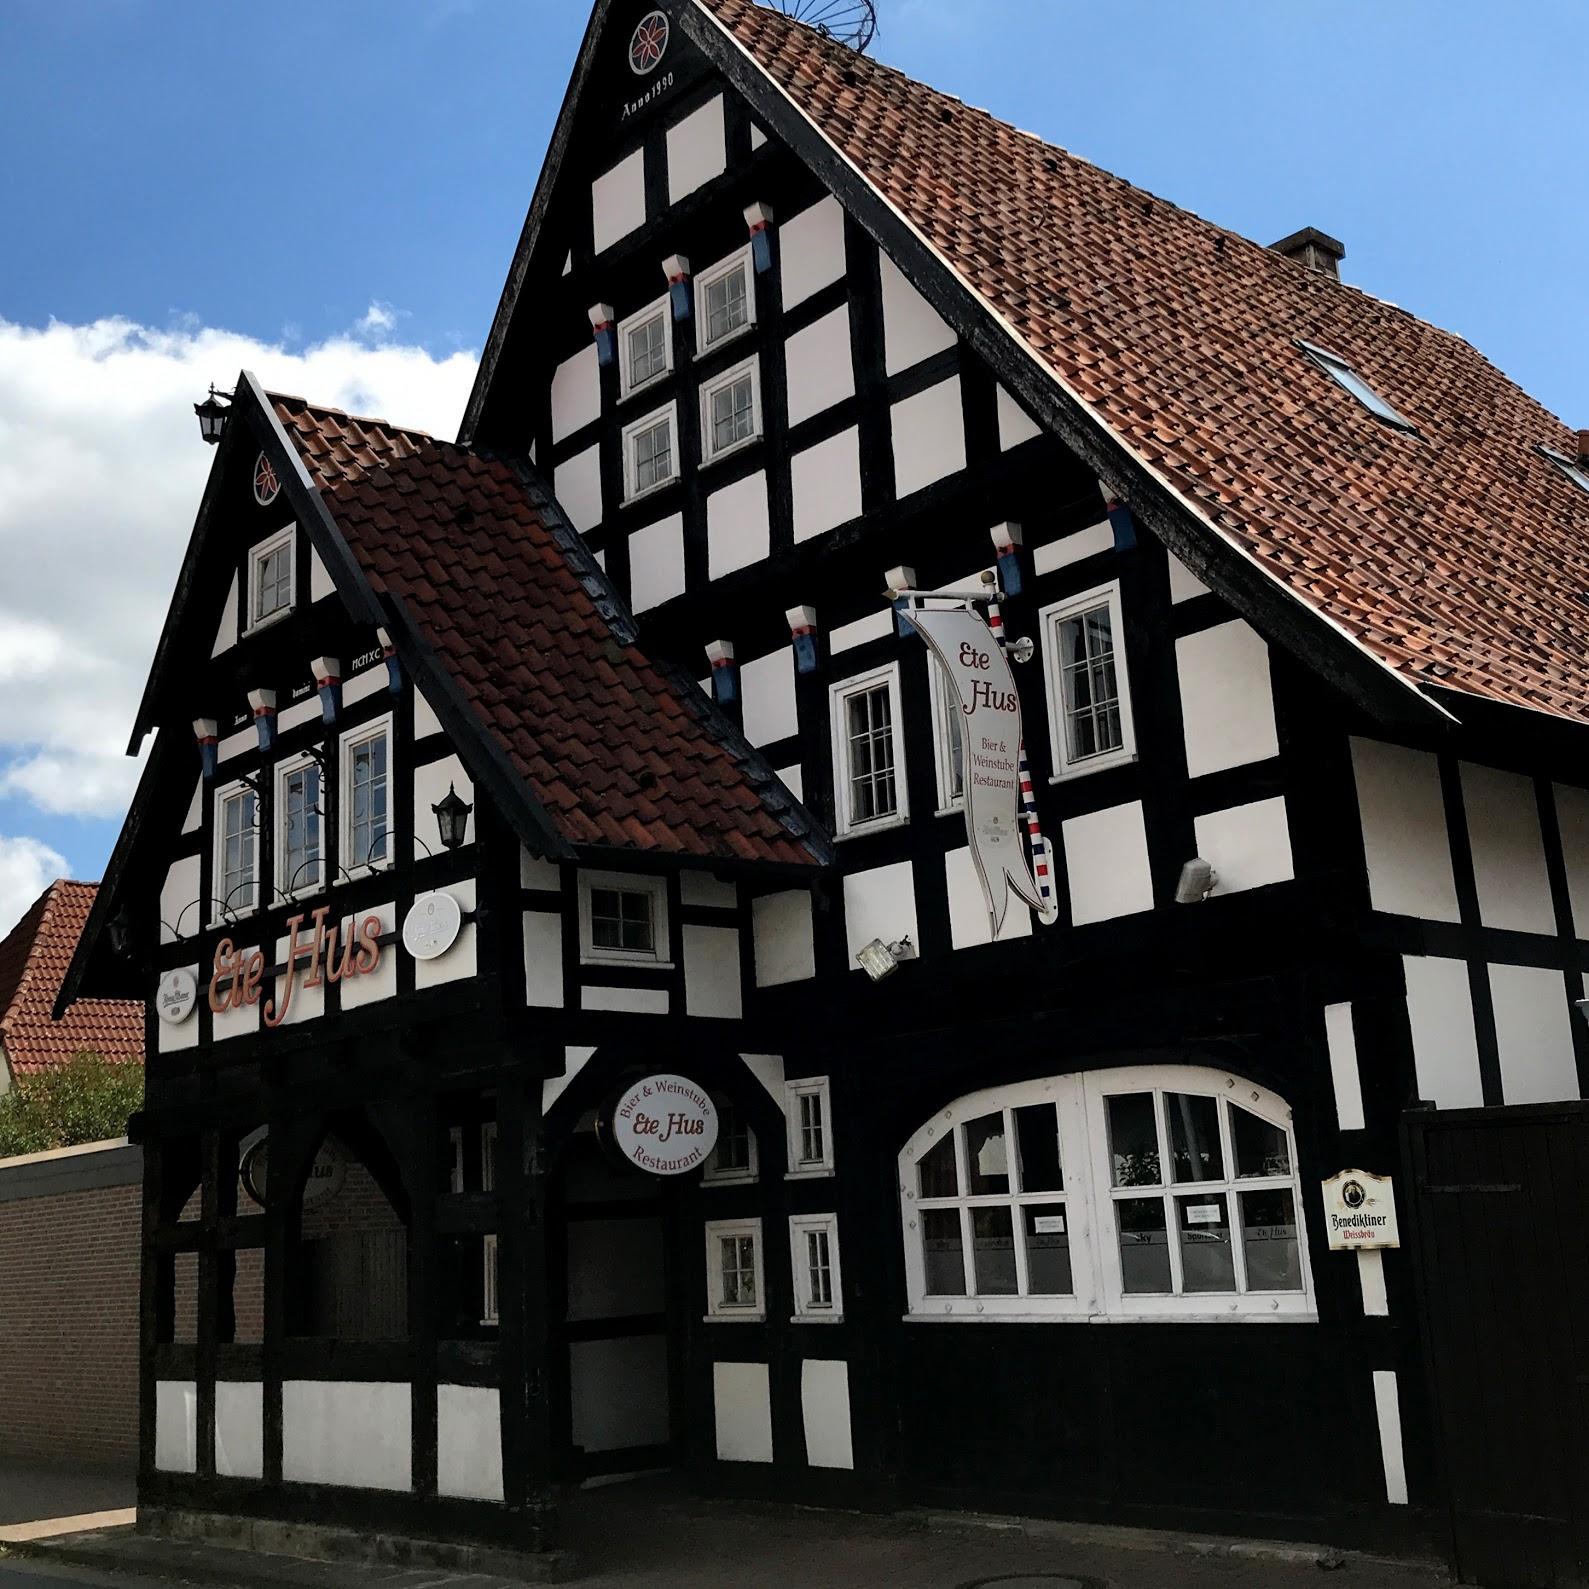 Restaurant "Ete Hus" in Wunstorf